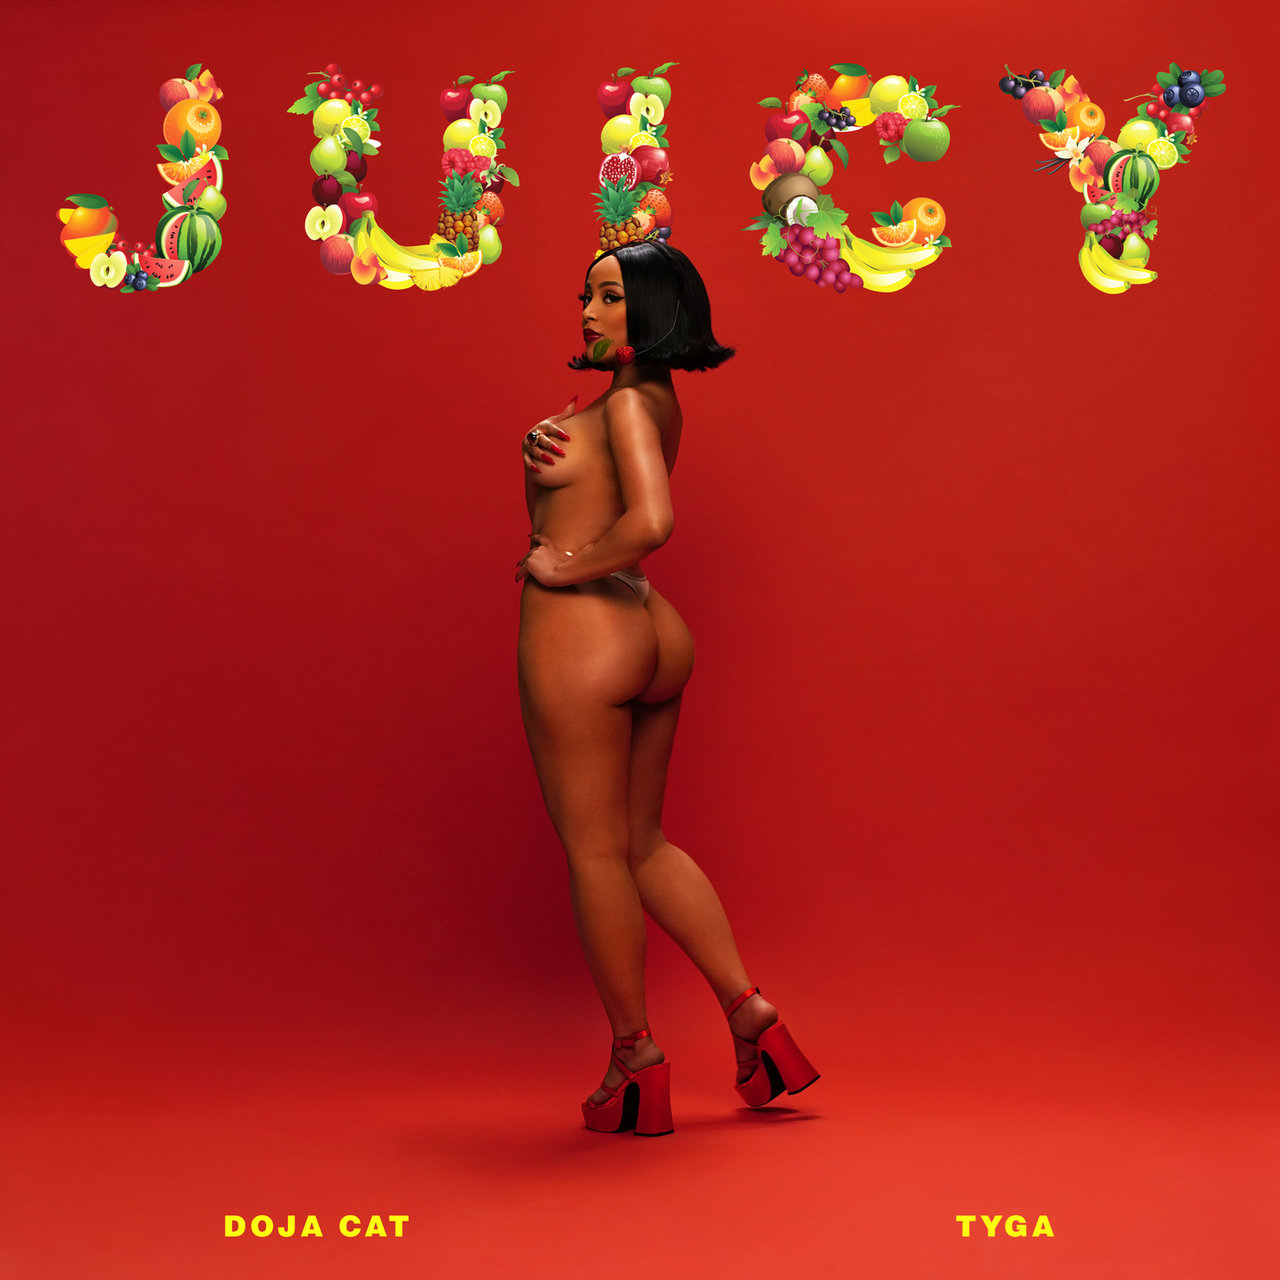 Doja Cat - Juicy (ft. Tyga) (Cover)